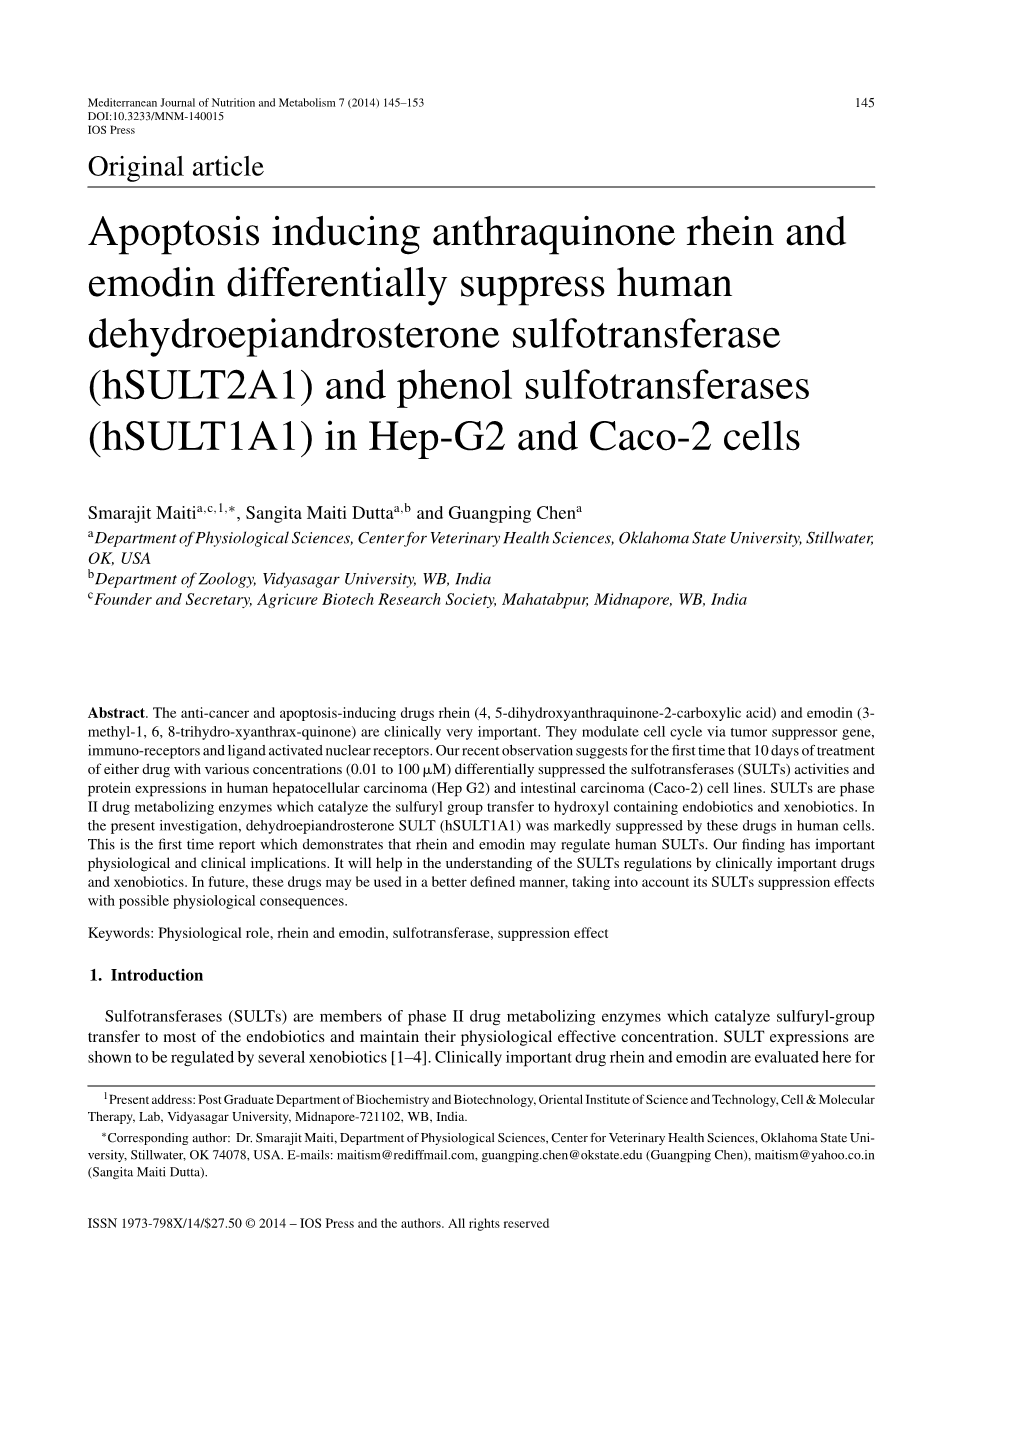 Apoptosis Inducing Anthraquinone Rhein and Emodin